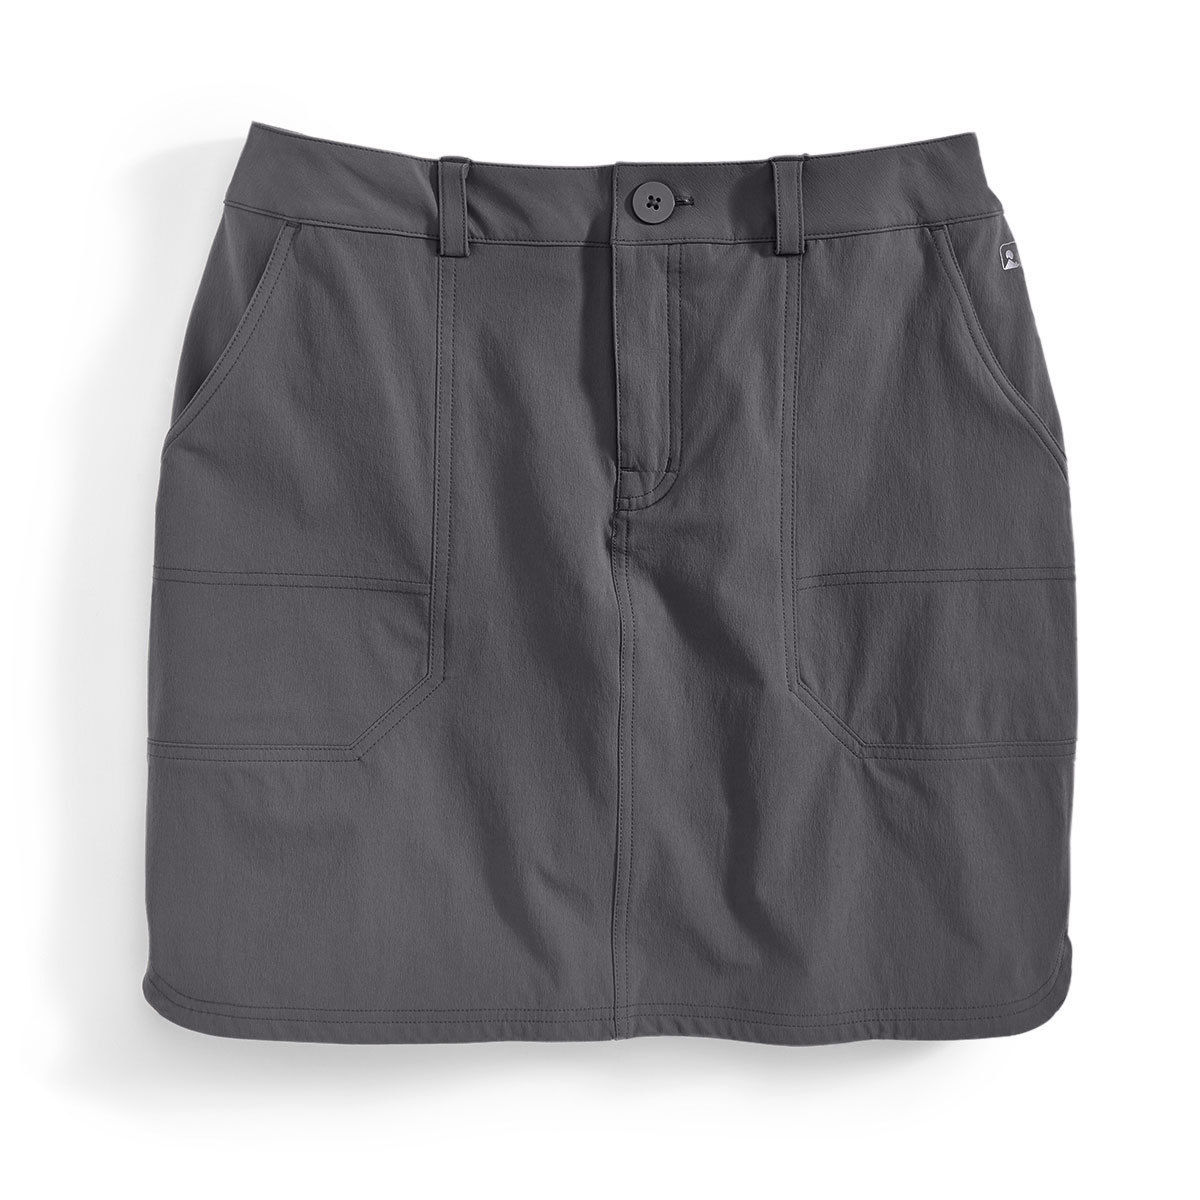 Macabi Skirt Reviews - Trailspace